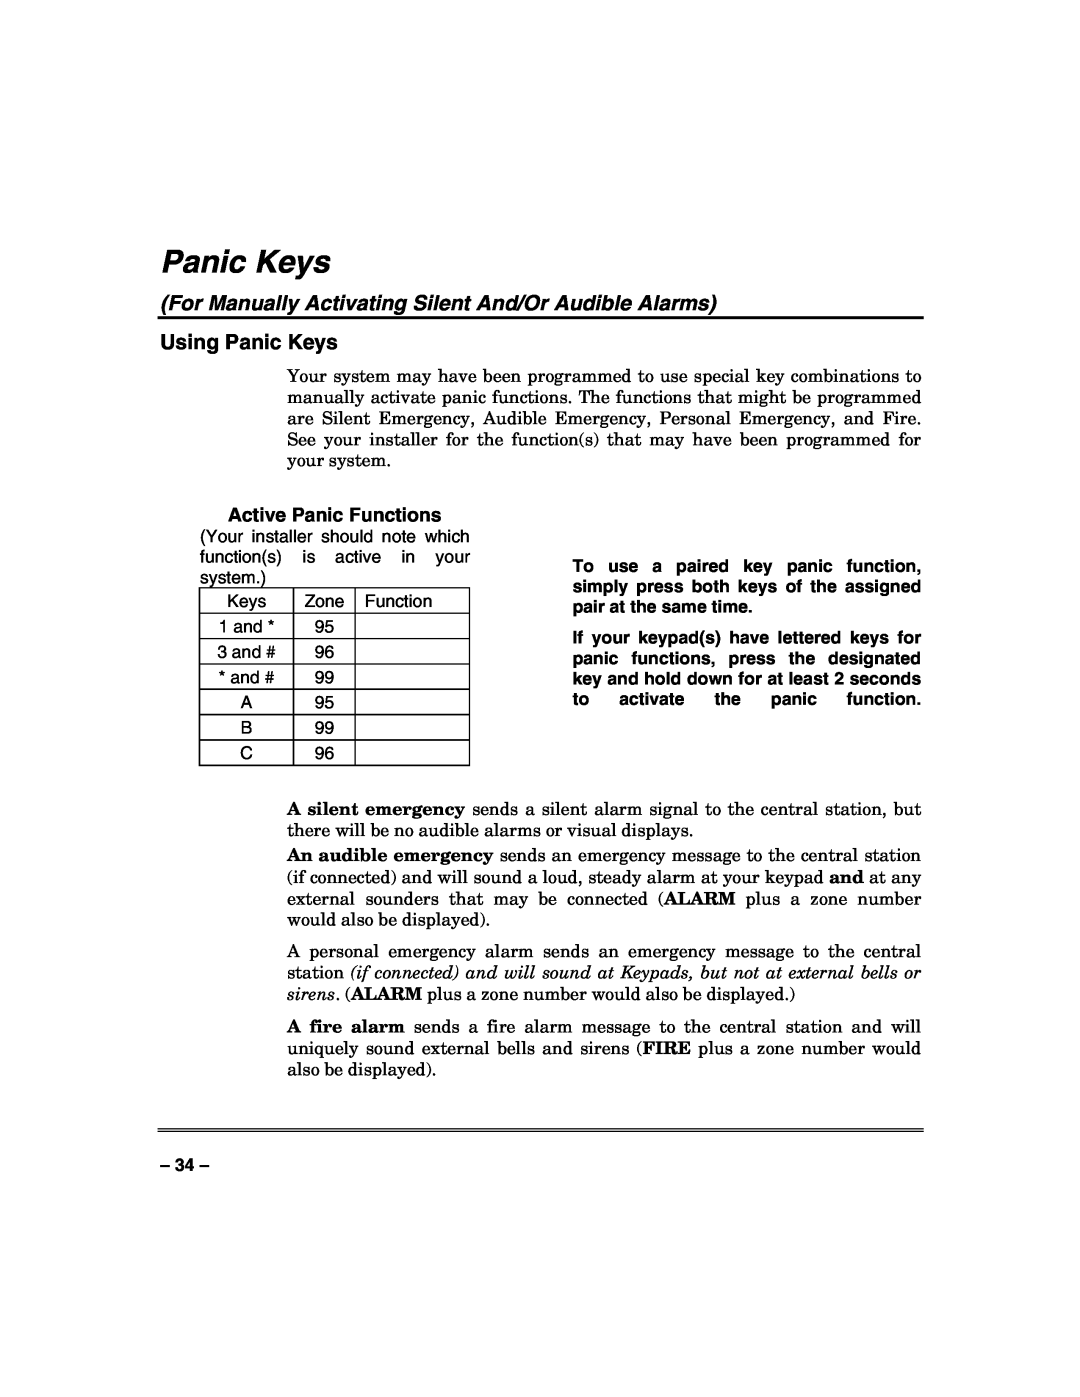 Honeywell N7003V3 manual Using Panic Keys, Active Panic Functions 